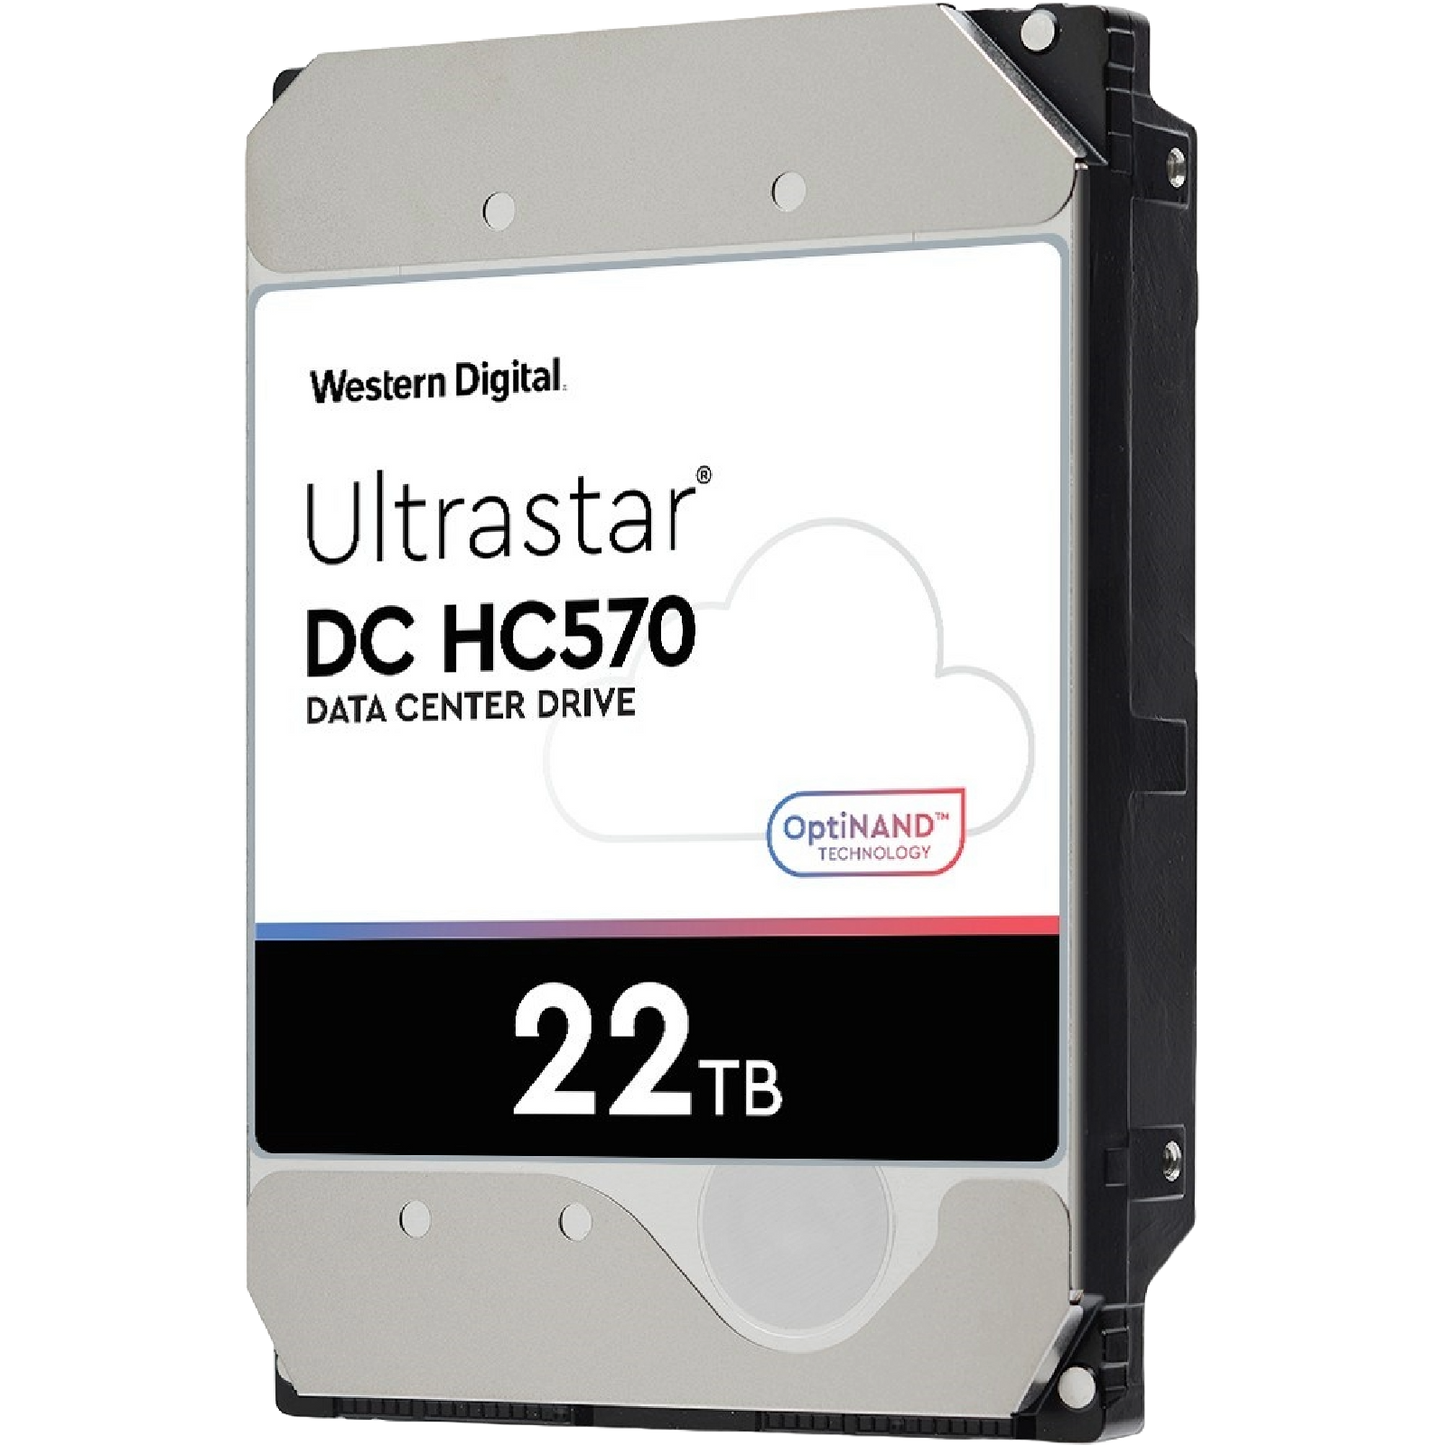 WD Ultrastar DC HC570 22TB Enterprise 3.5" SATA HDD CMR WUH722222ALE6L4 0F48155 OEM